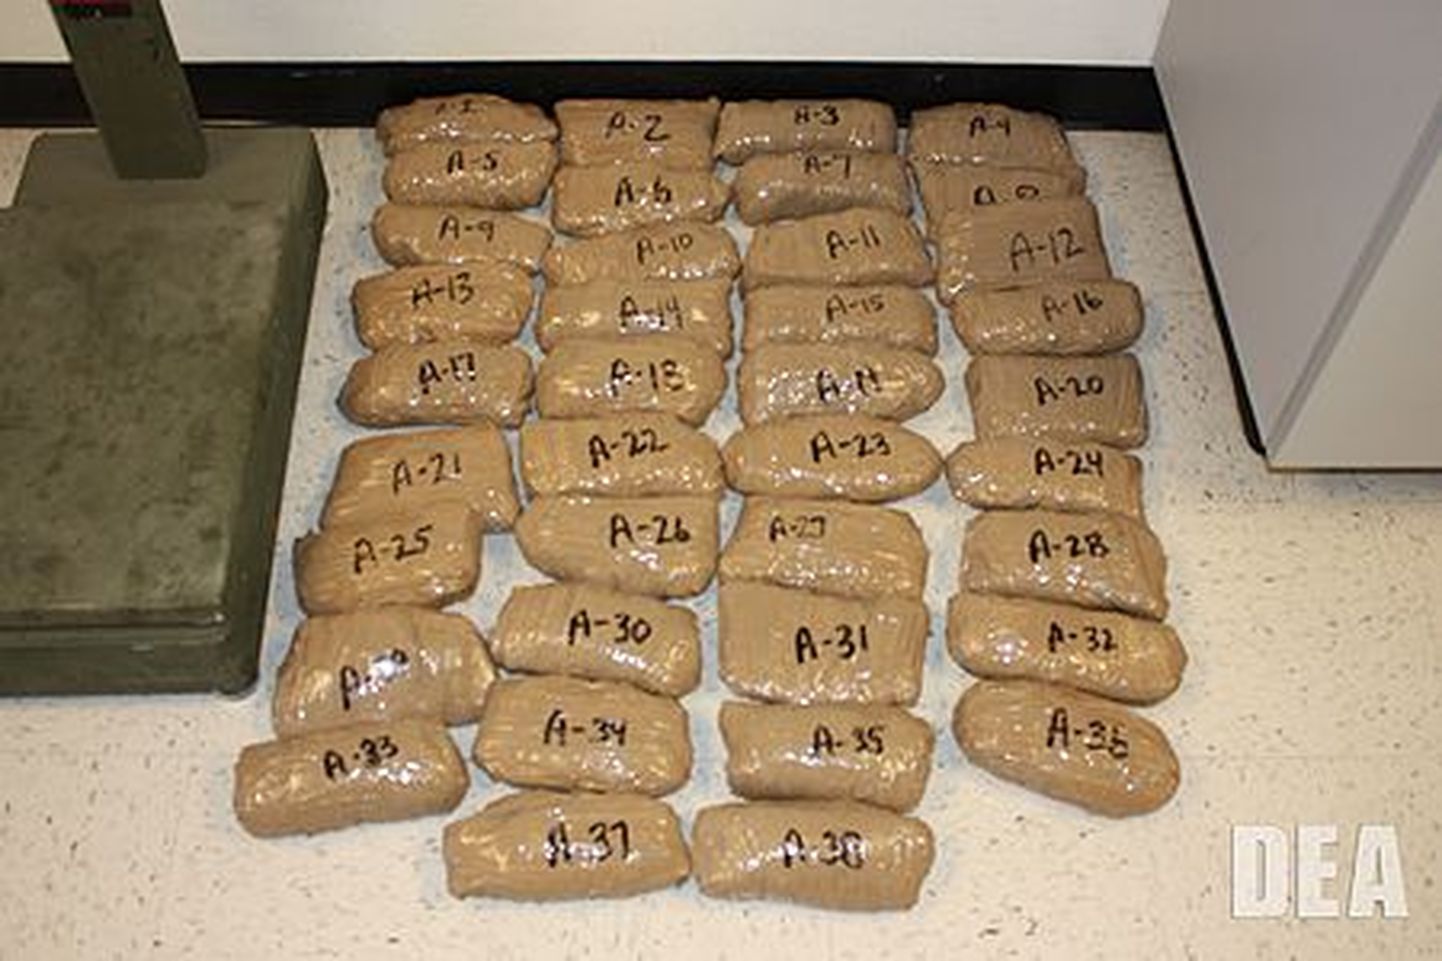 USA narkopolitsei konfiskeeris 17 kilogrammi metamfetamiini